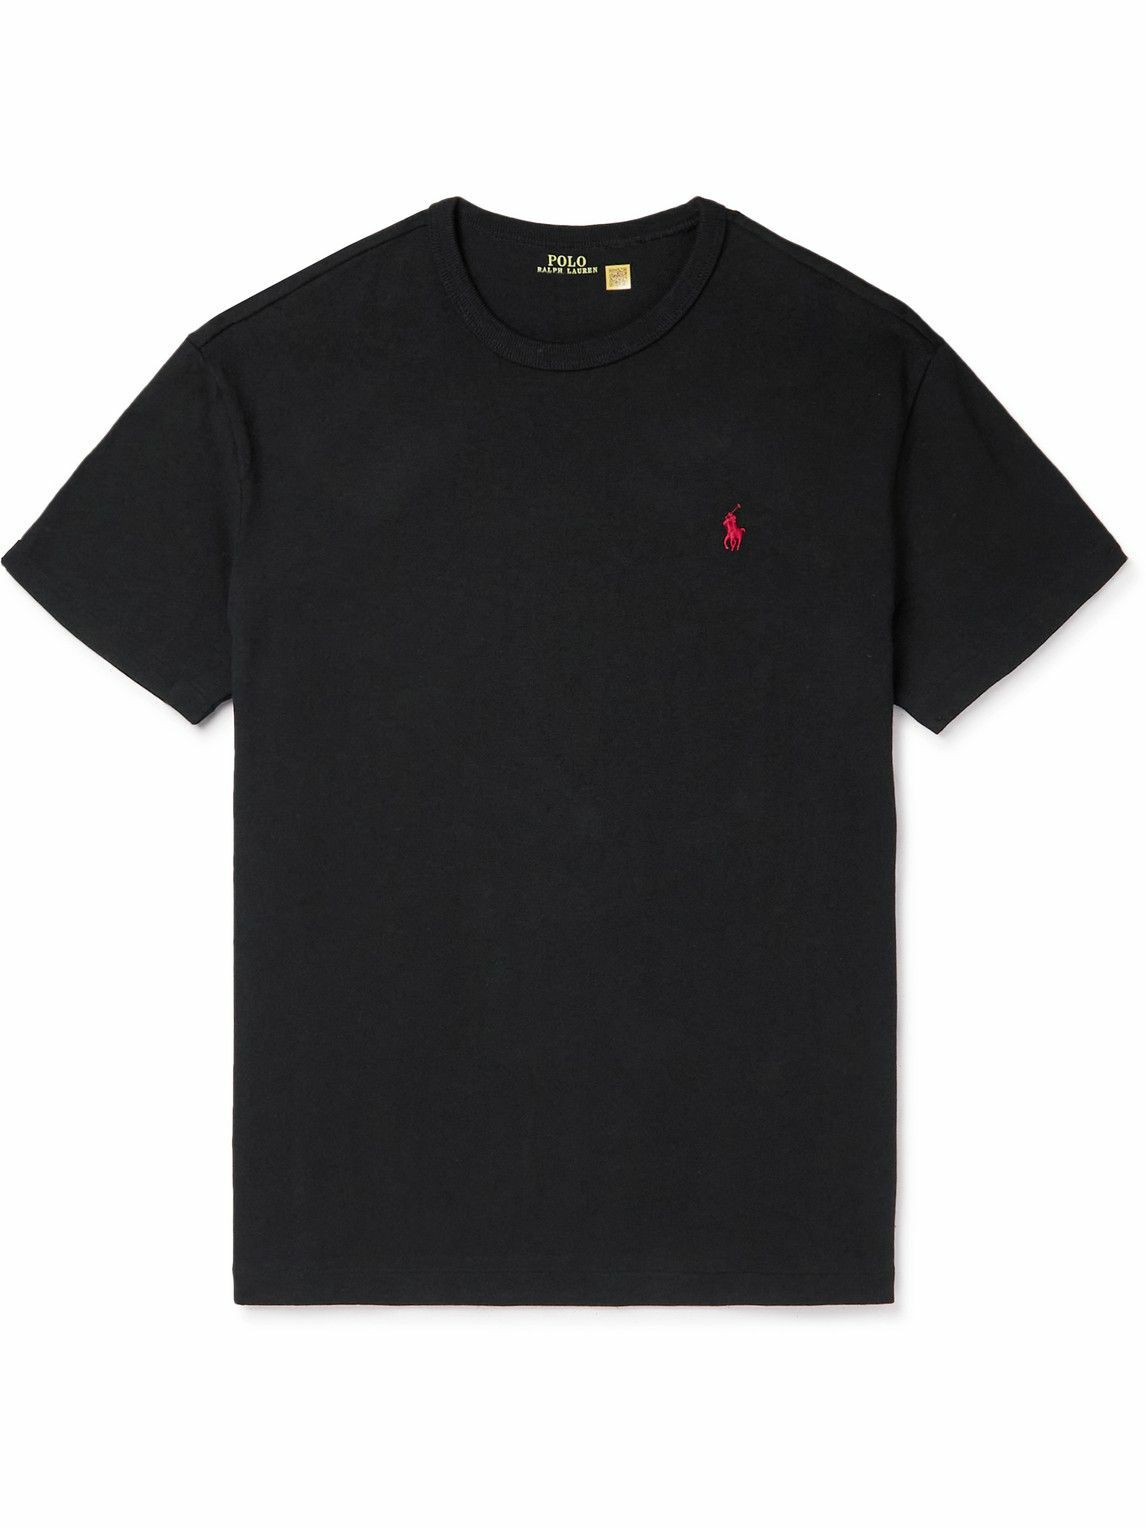 Polo Ralph Lauren - Logo-Embroidered Cotton-Jersey T-Shirt - Black